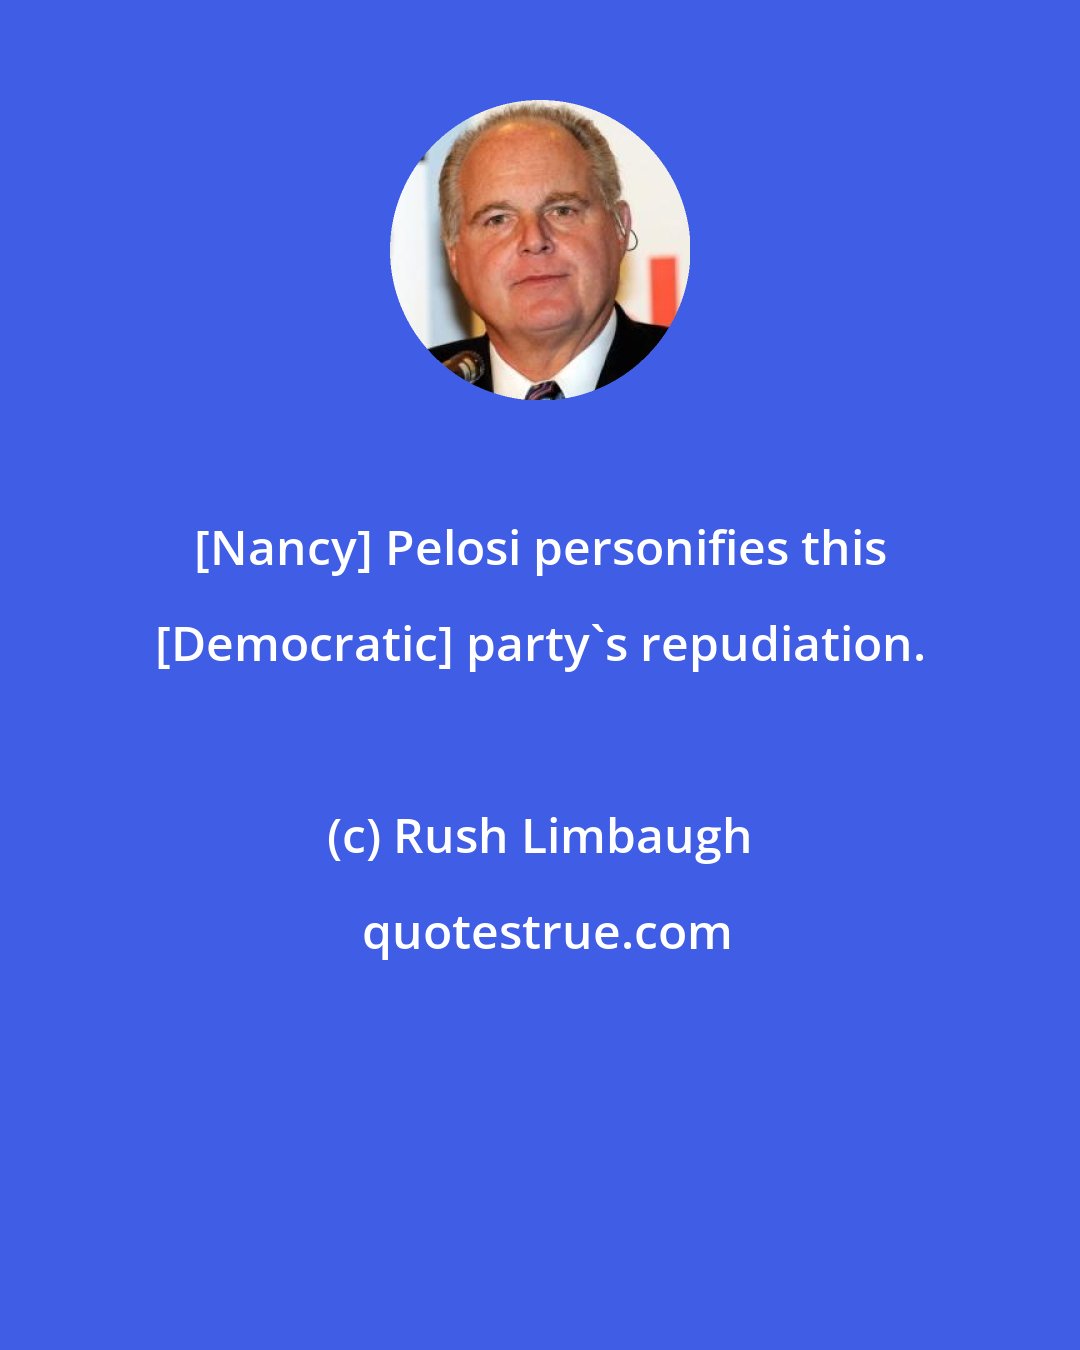 Rush Limbaugh: [Nancy] Pelosi personifies this [Democratic] party's repudiation.